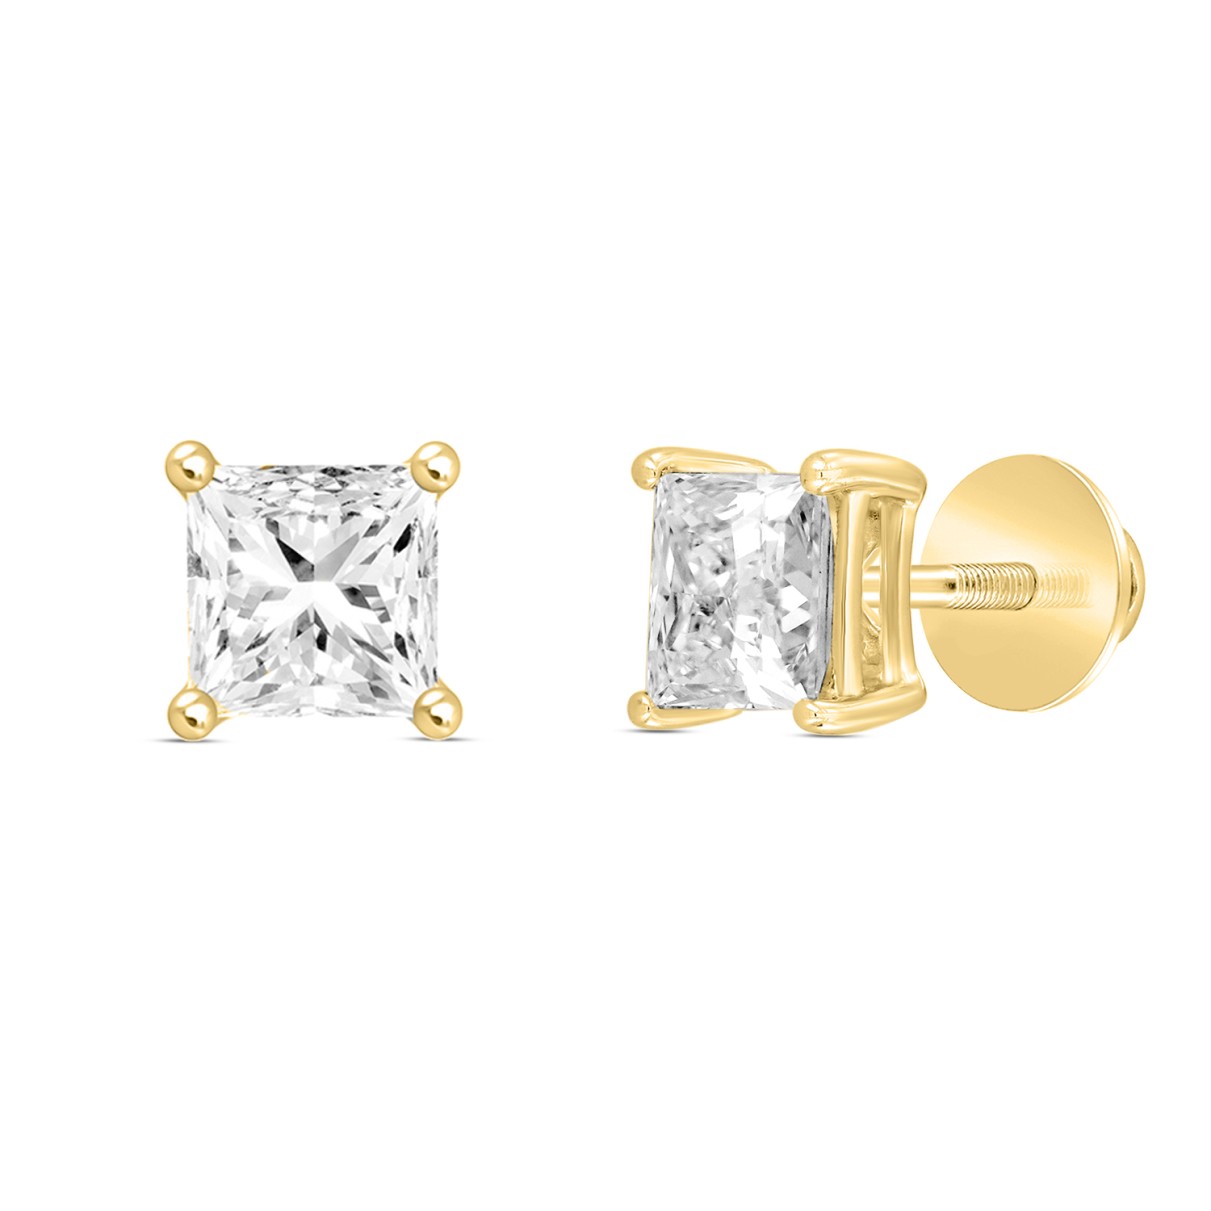 LADIES SOLITAIRE EARRINGS  2CT PRINCESS DIAMOND 14K YELLOW GOLD